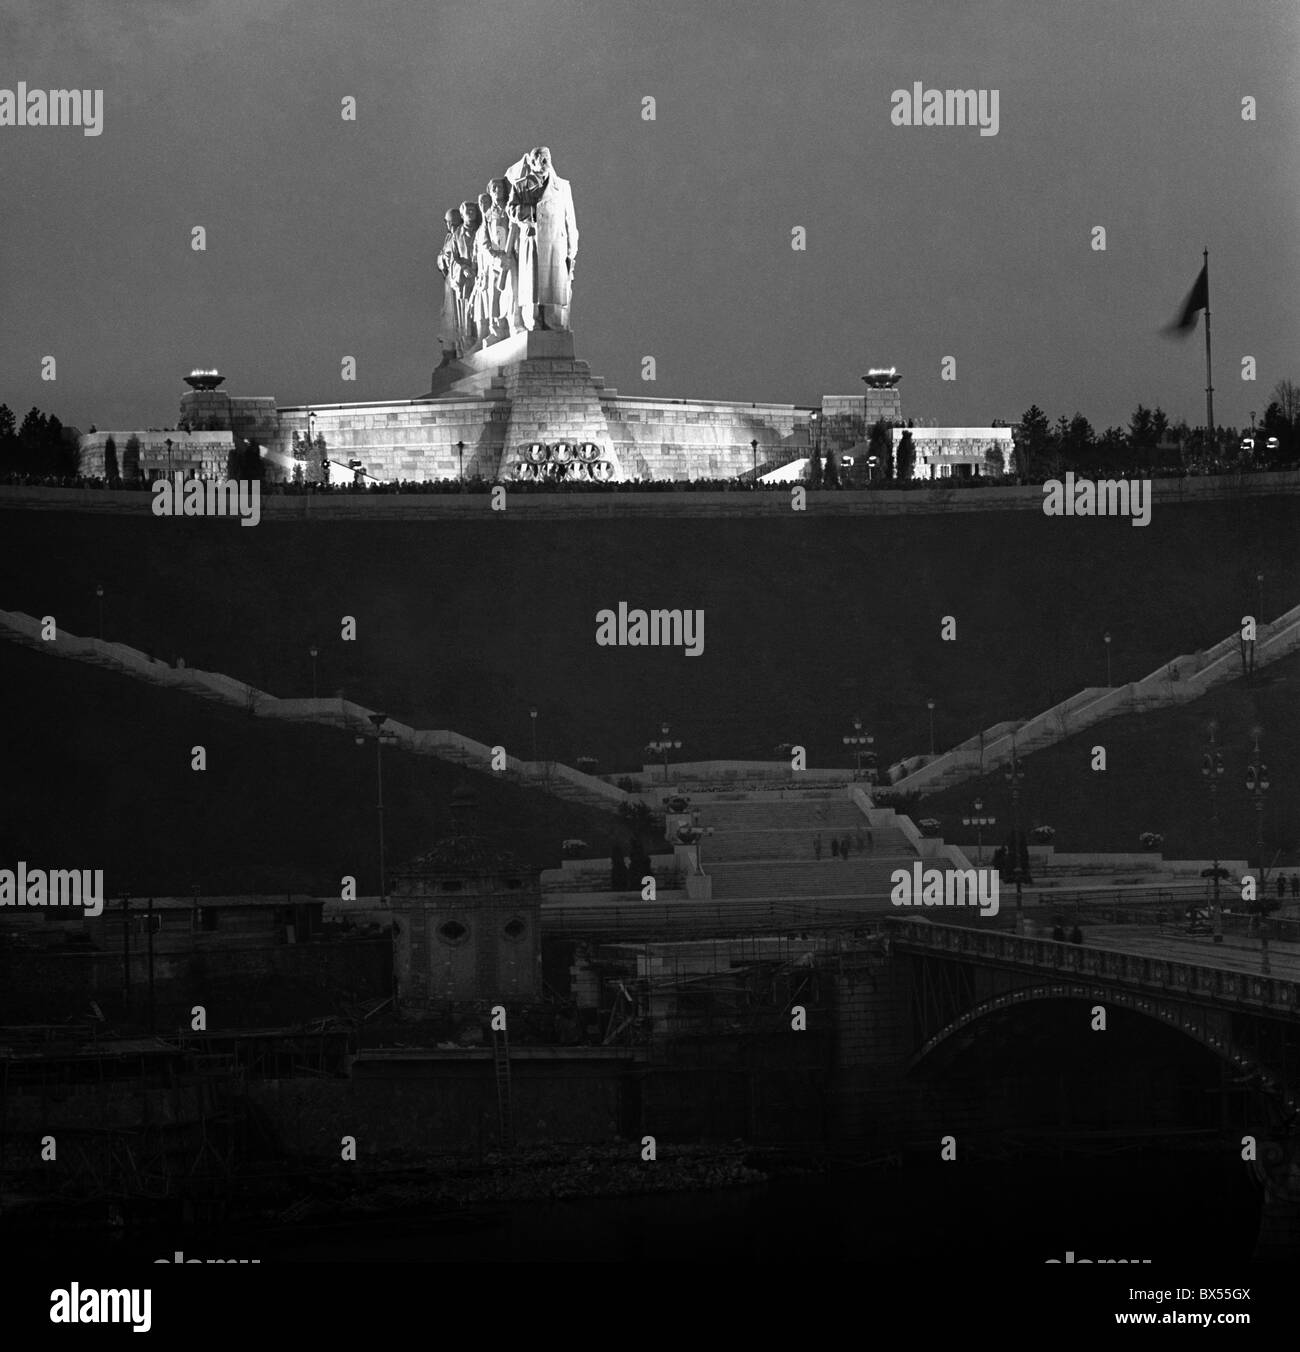 Stalin memorial monument sculpture, night Stock Photo